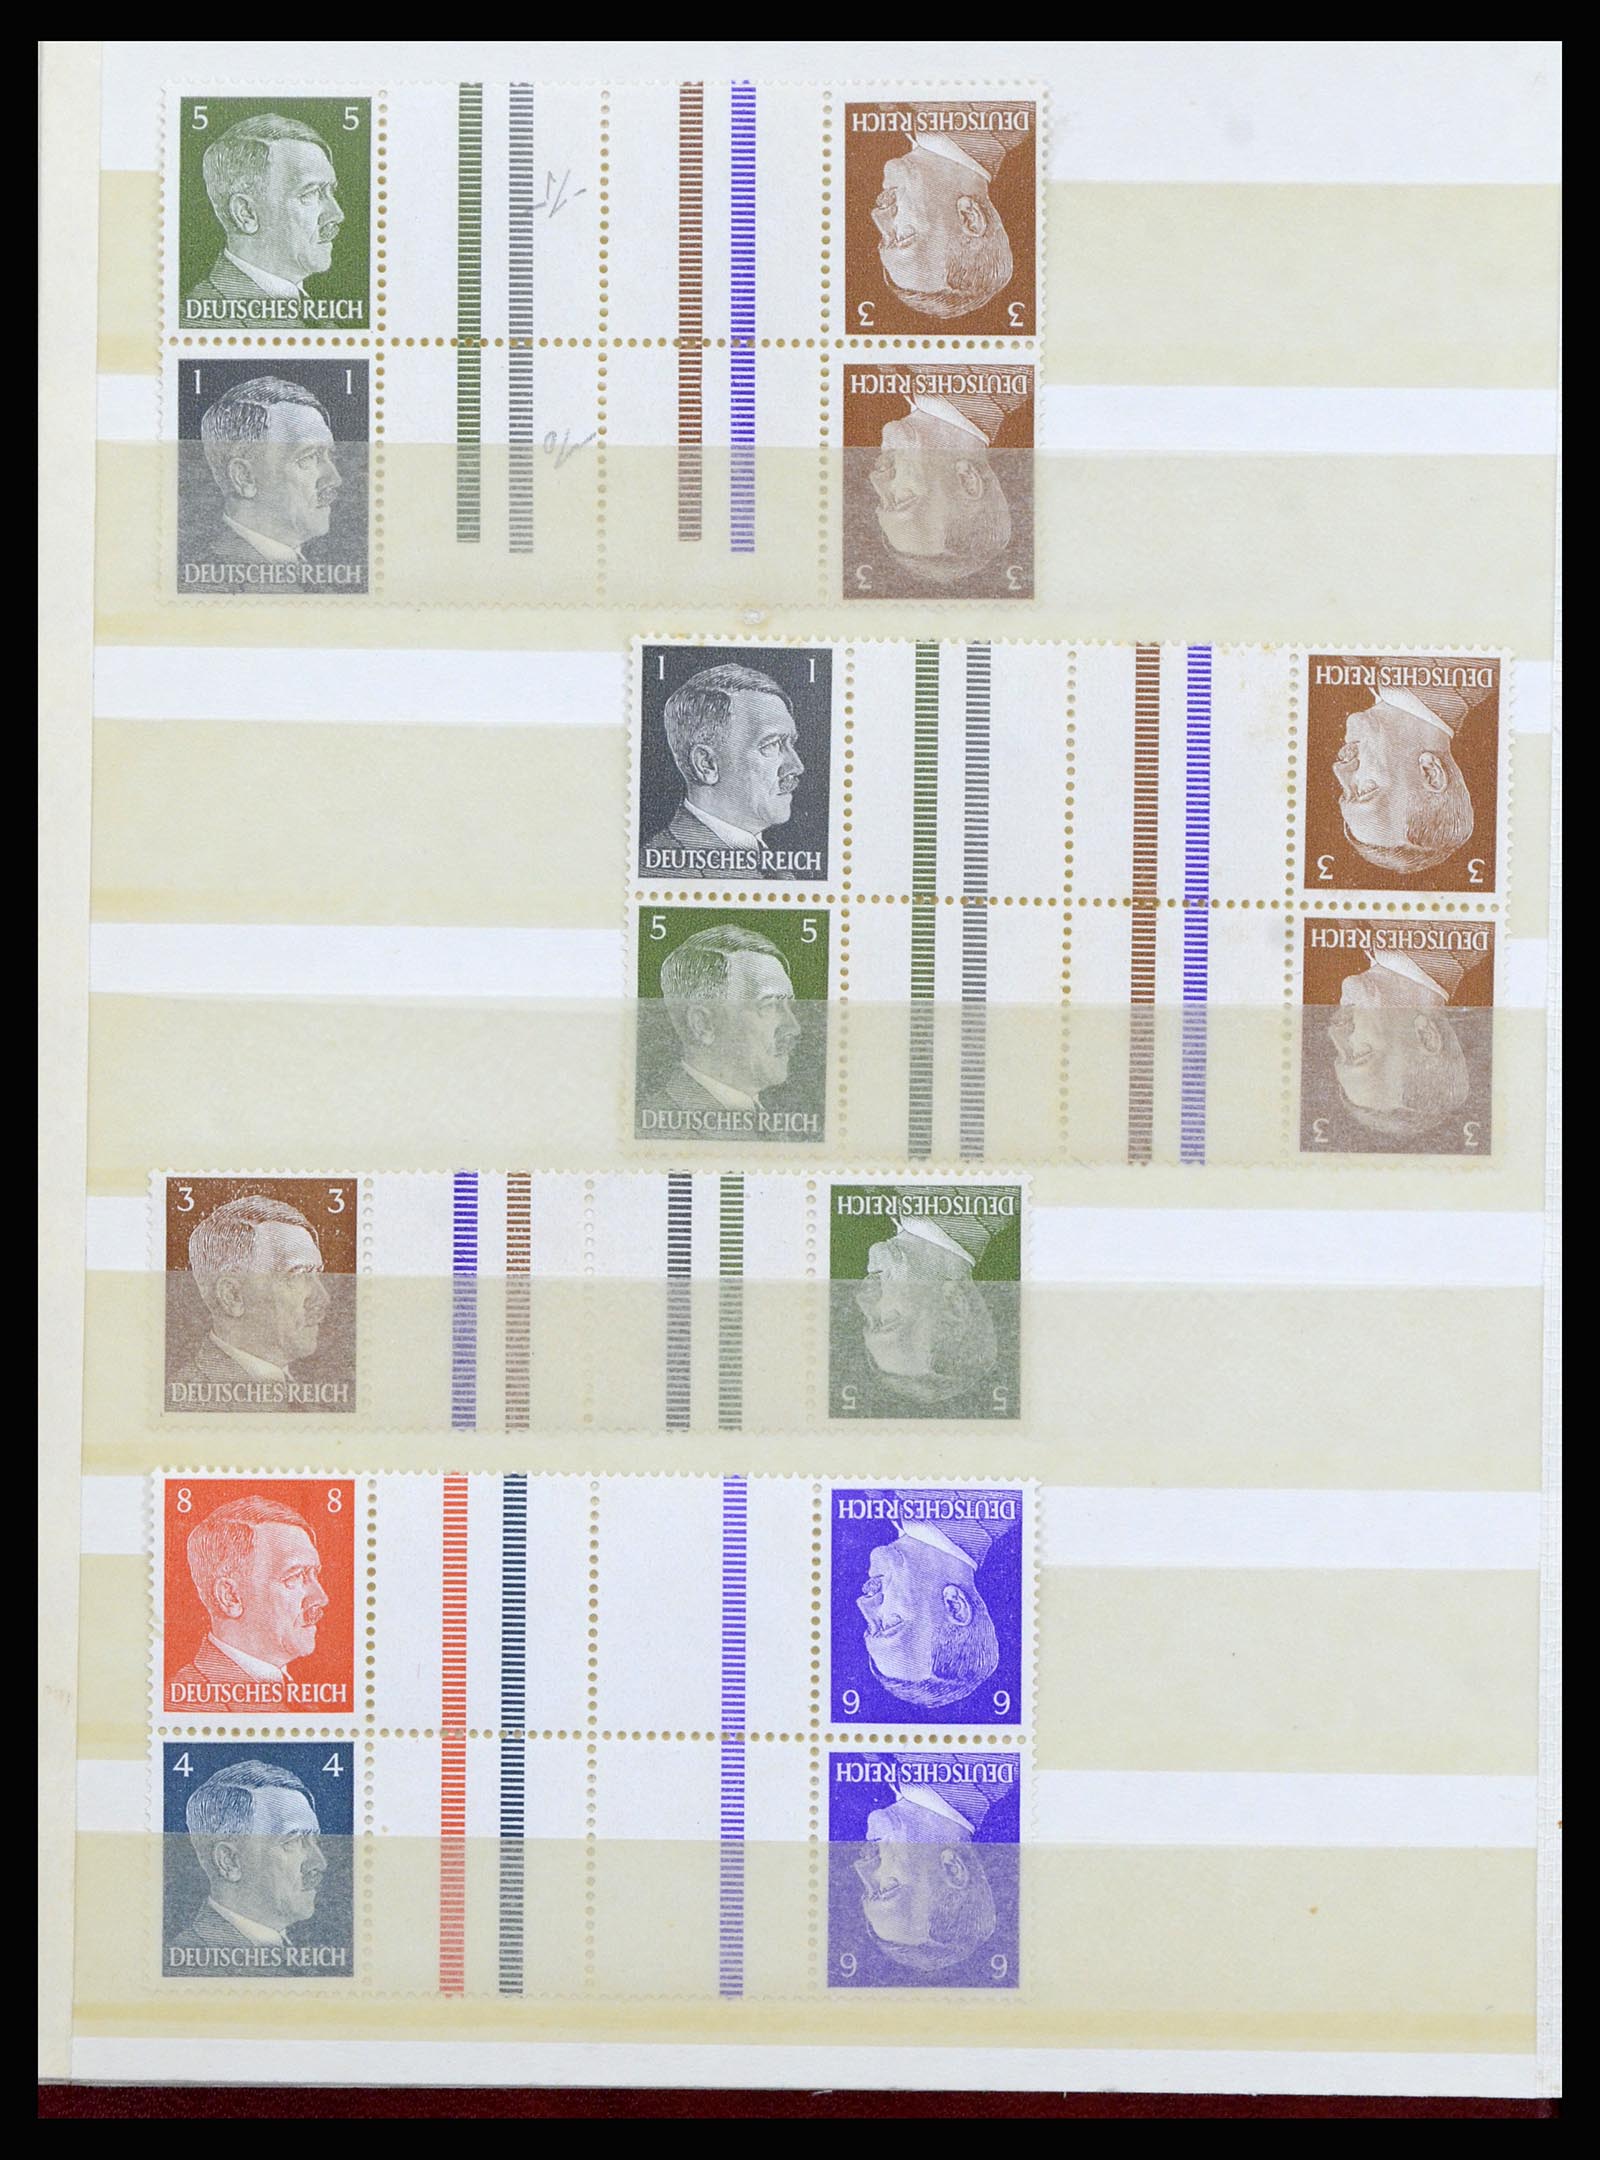 37103 073 - Stamp collection 37103 German Reich 1880-1945.